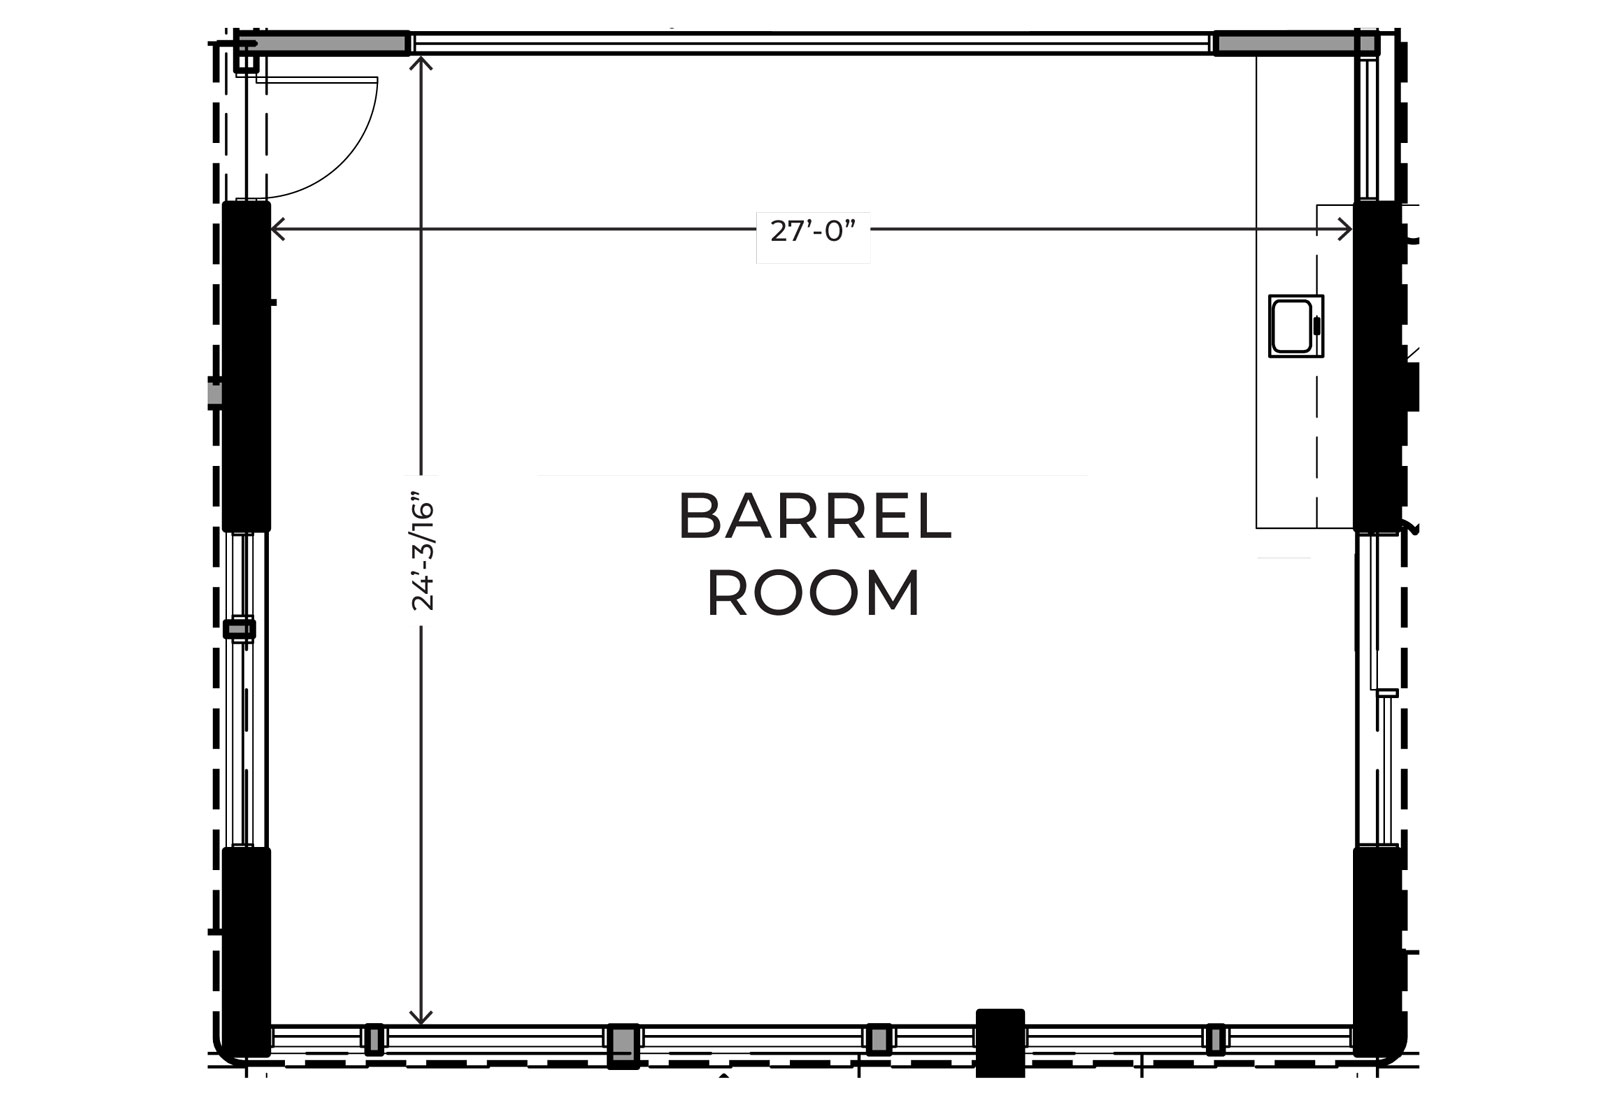 Barrell Room Floorplan